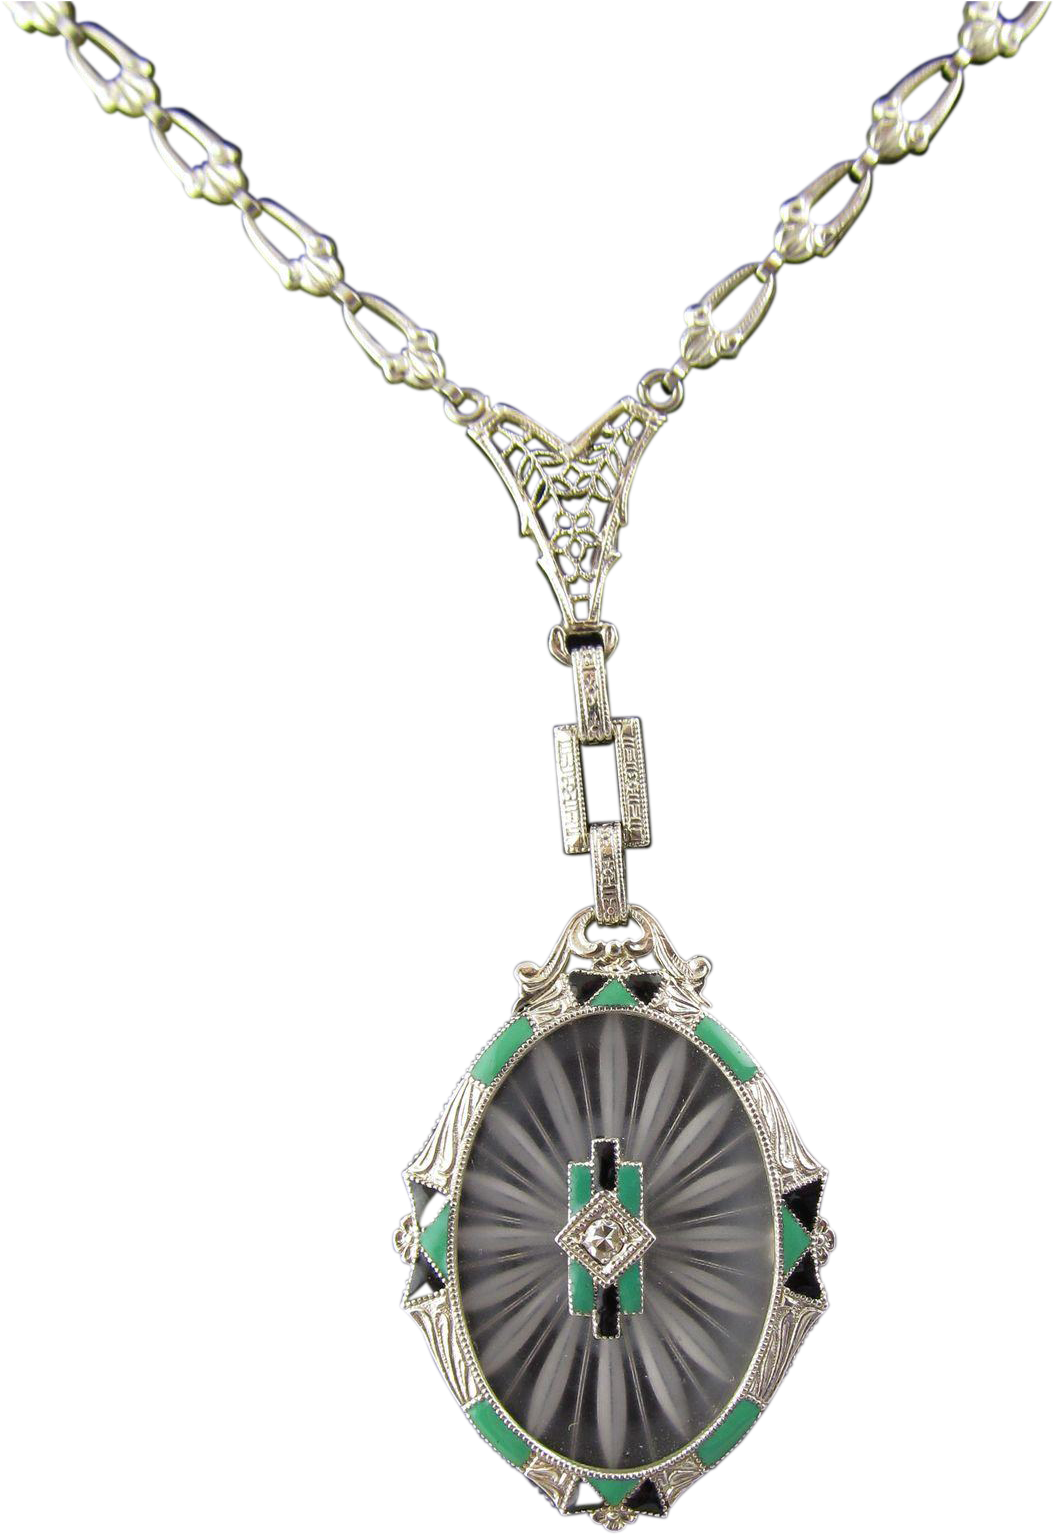 1920's Art Deco Enamel Camphor Glass Necklace, 14 Karat - 1920's Art Deco Enamel Camphor Glass Necklace, 14 Karat (1534x1534)